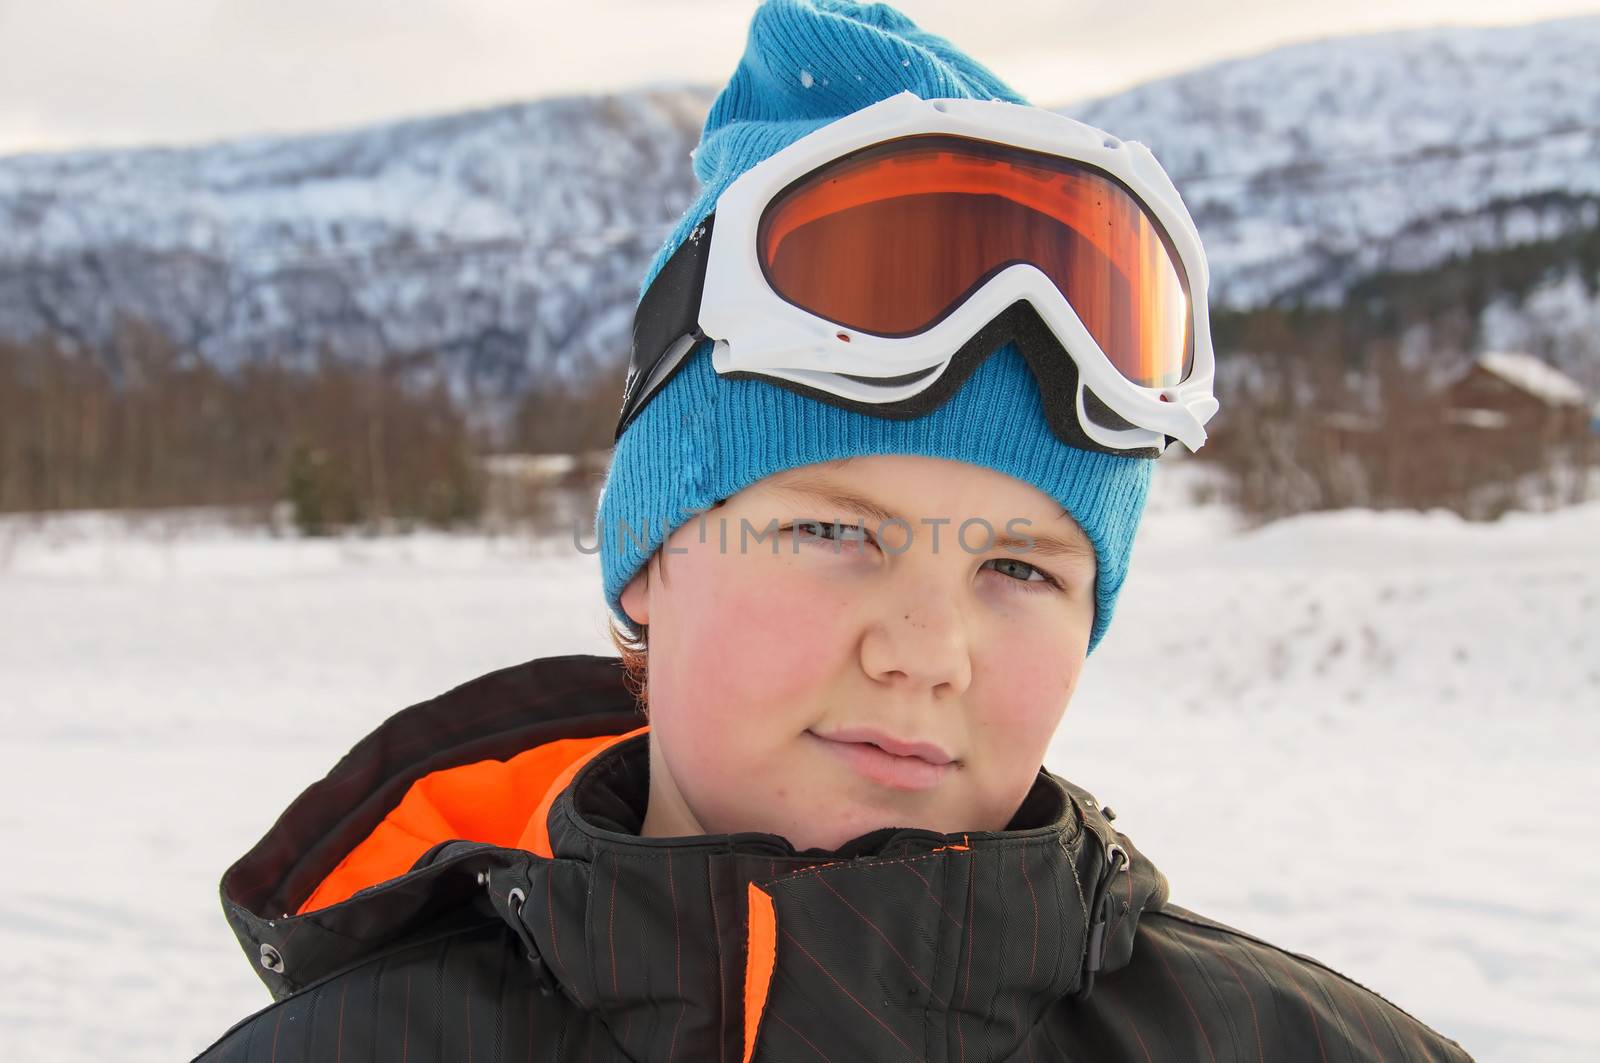 A happy young boy ready to ski/snowboard